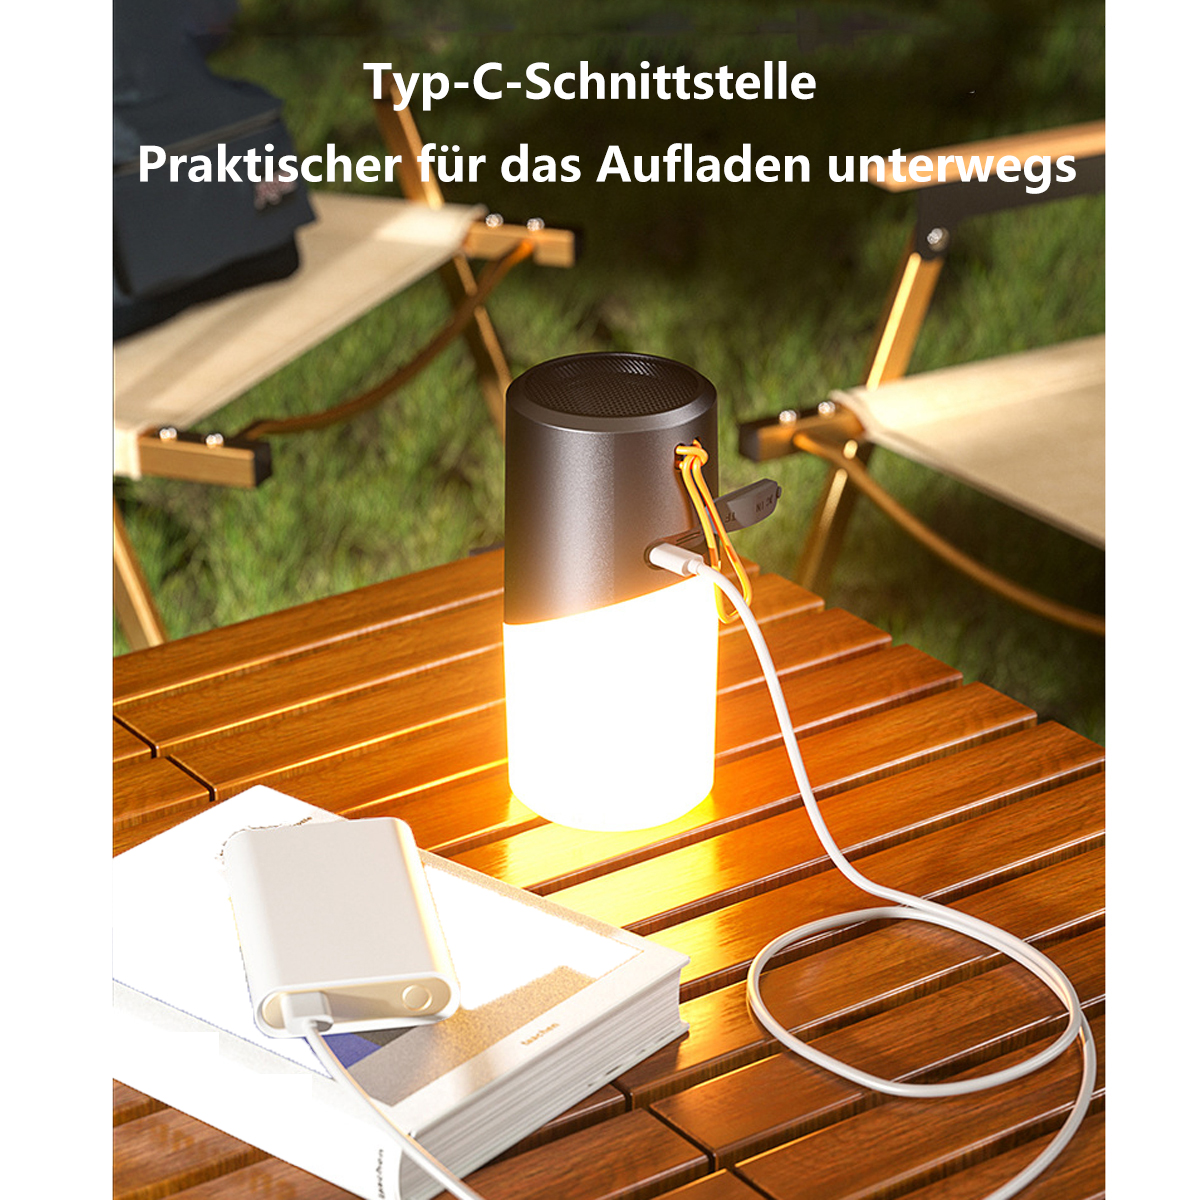 SYNTEK small Weiß, light bluetooth outdoor Wasserfest audio Lautsprecher Wireless Bluetooth-Lautsprecher, speaker waterproof portable light ambient